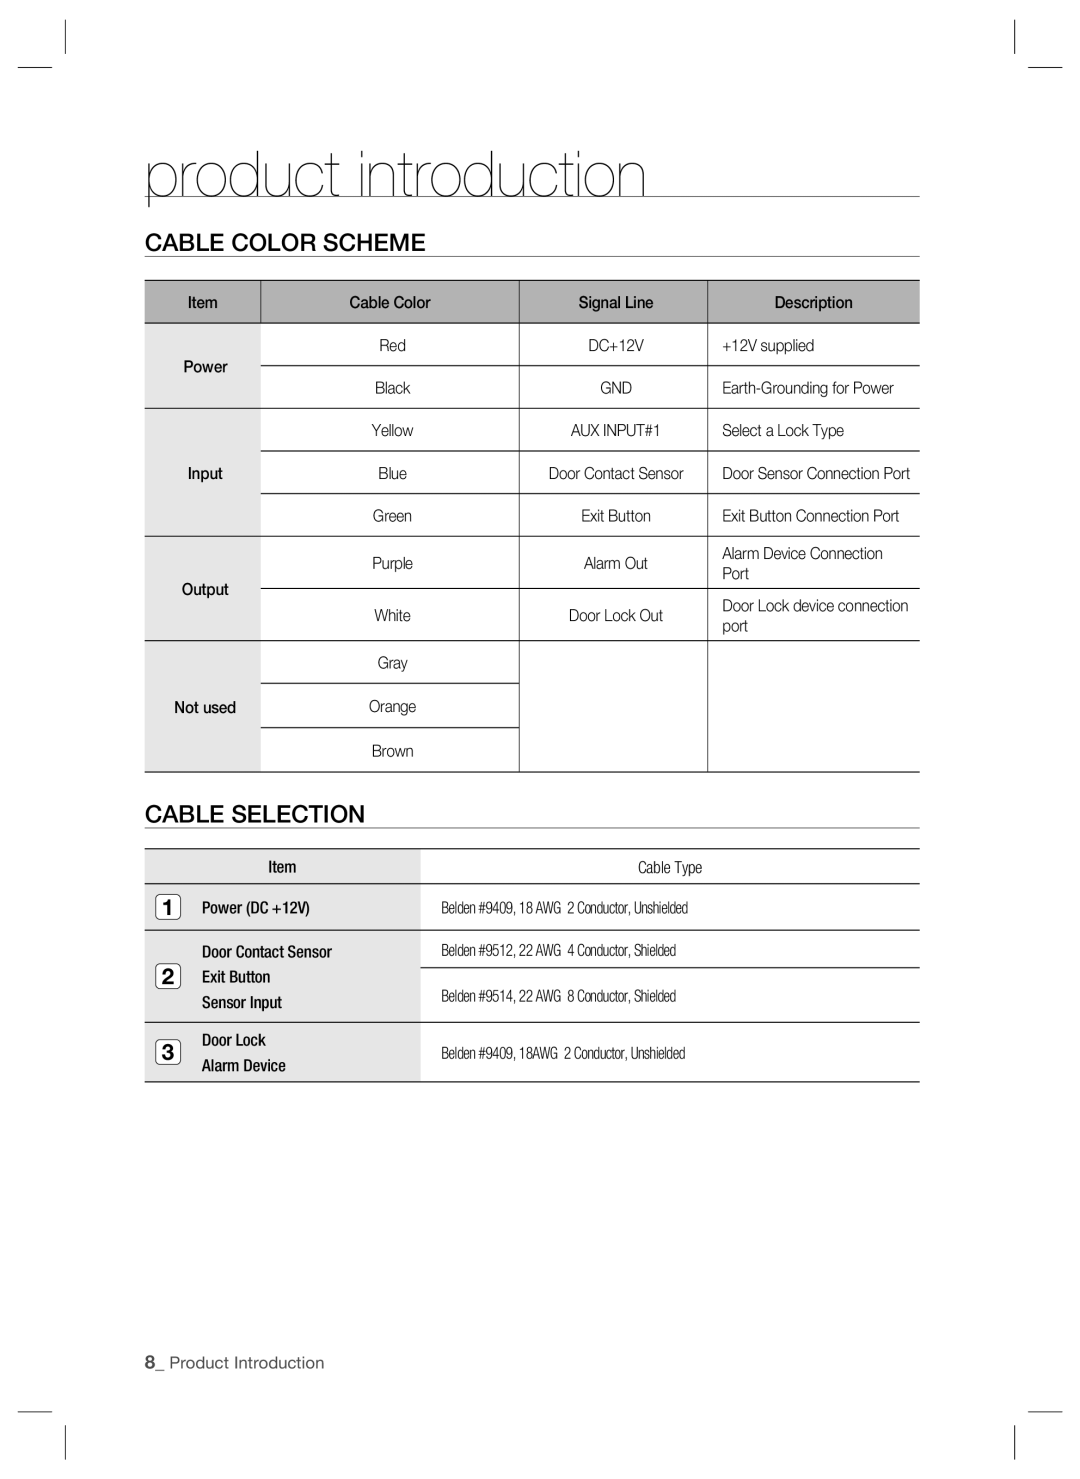 Samsung SSA-S1000 user manual Cable Color Scheme, Cable Selection, product introduction, 8_ Product Introduction 